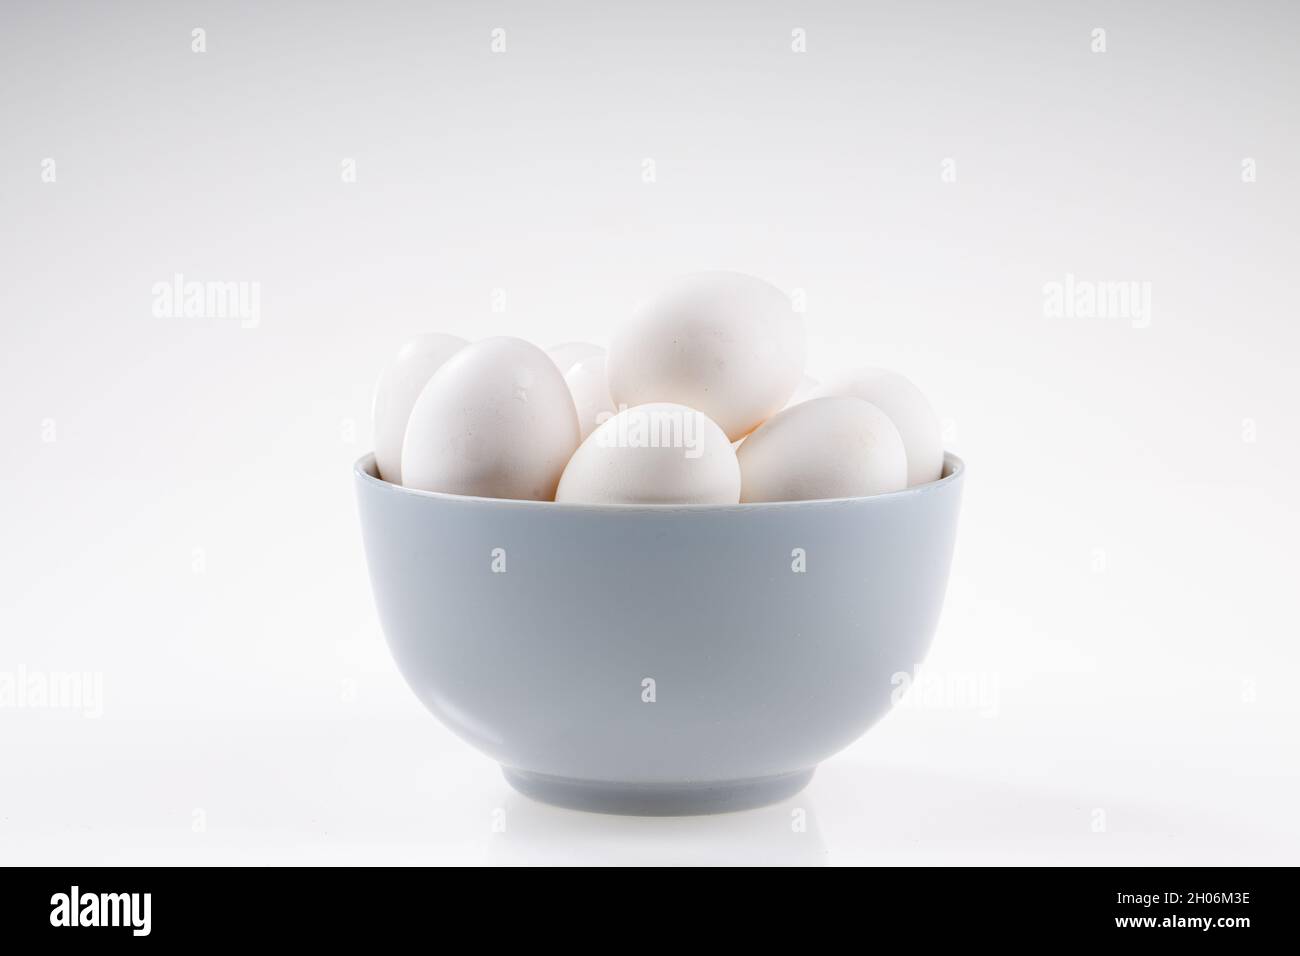 Cute Chicken Ceramic Egg Holder Isolated On White Background Stock